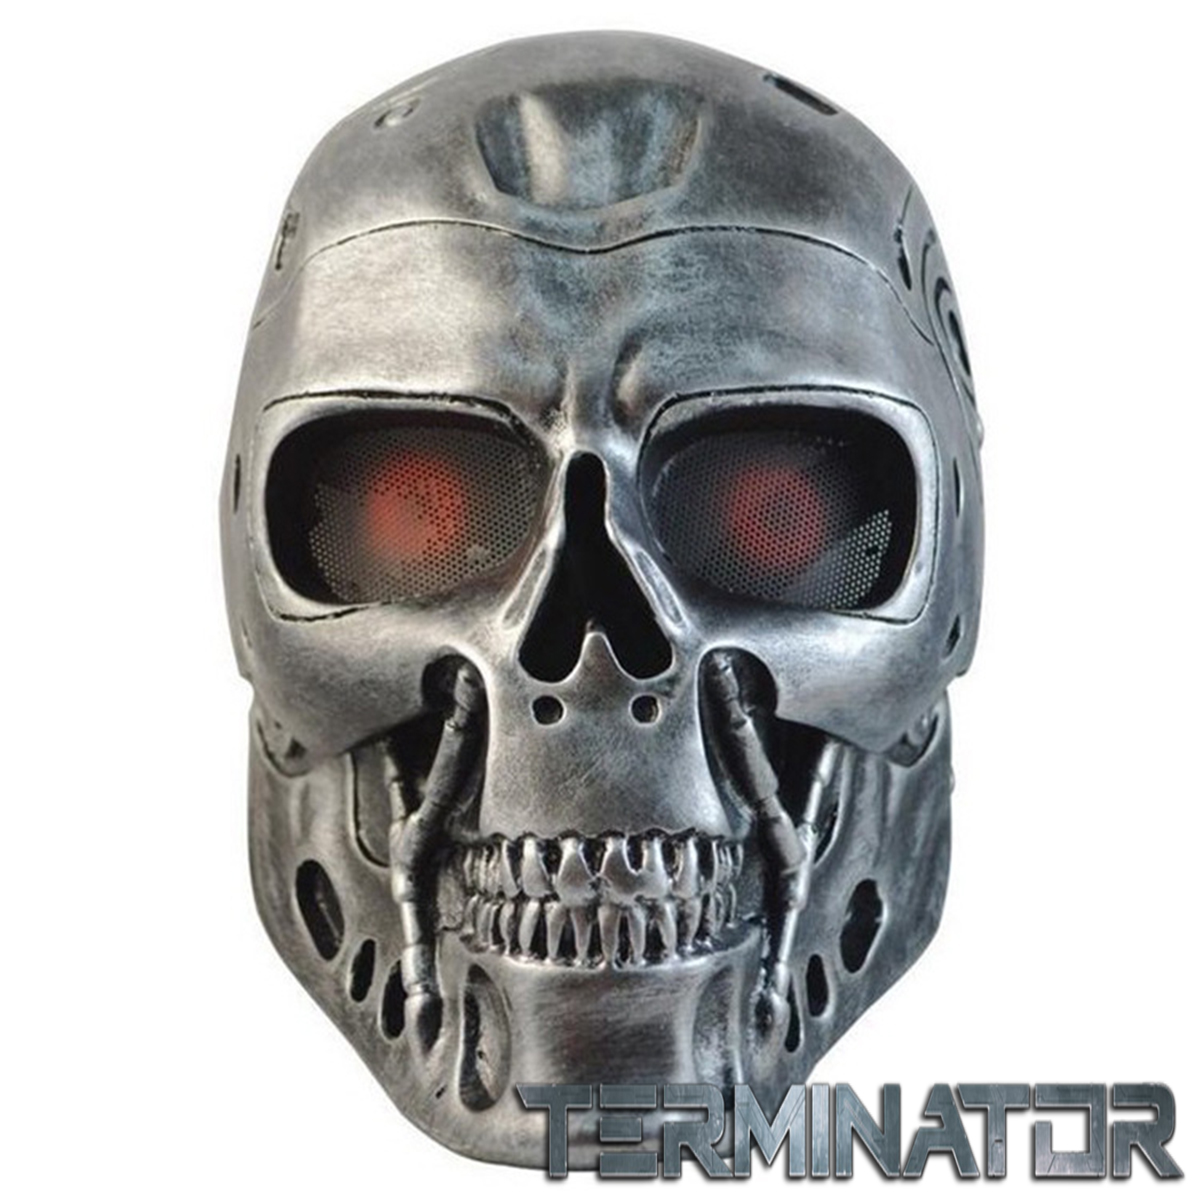 Mask จากหนัง Terminator เทอร์มิเนเตอร์ T800 หน้ากาก คนเหล็ก ฅนเหล็ก Ironman วัสดุ ไฟเบอร์กลาส Fiberglass ป้องกัน สำหรับใส่ ปาร์ตี้ แฟนซี คอสเพลย์ สยองขวัญ สุดโหด 
ฮอกกี้ หมวก บีบีกัน ฮาโลวีน รักบี้ Horror Hockey Hat Marvel DC BBGUN Halloween Fancy Rugby